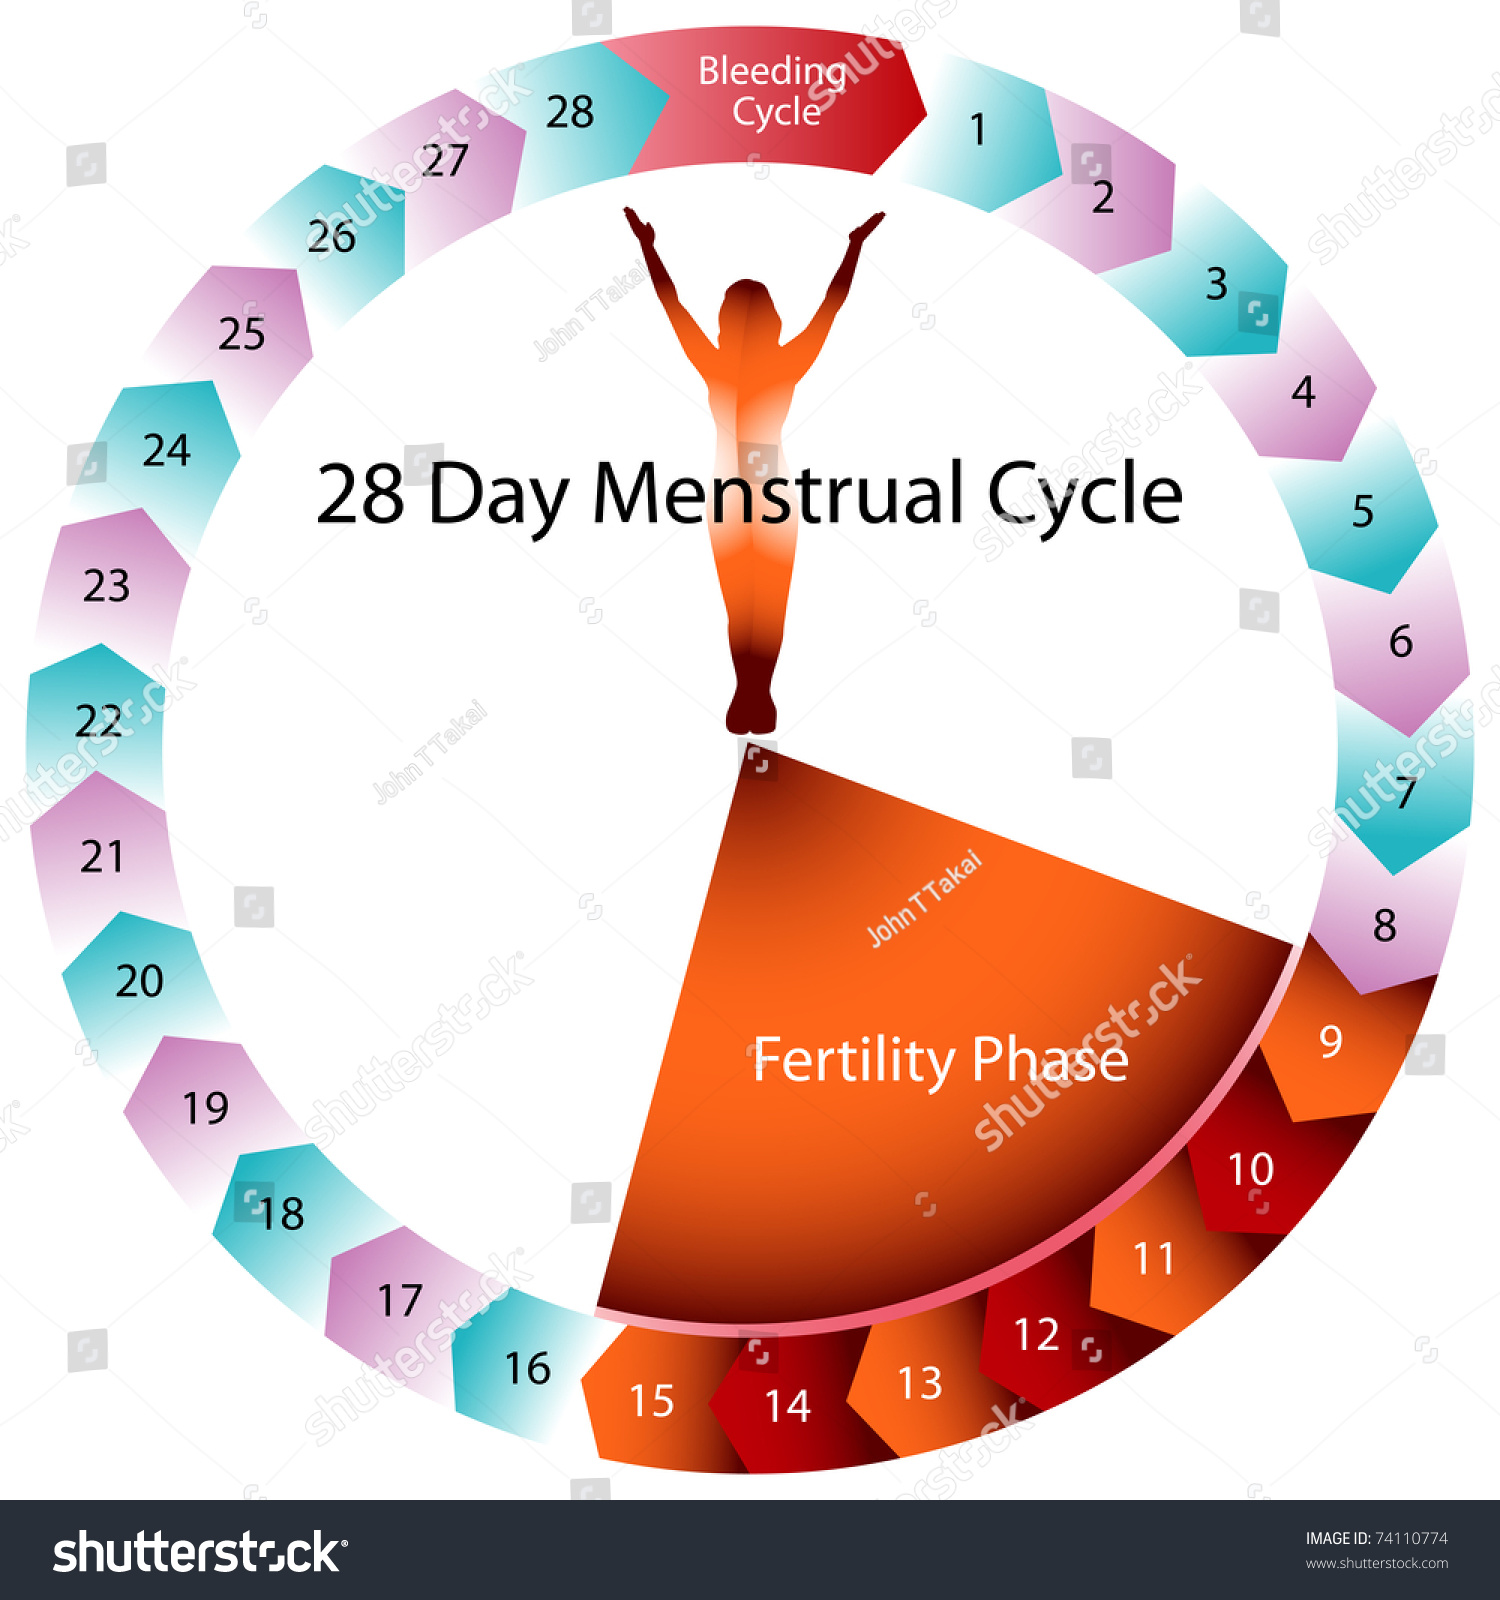 https://image.shutterstock.com/z/stock-vector-an-image-of-a-menstrual-cycle-chart-74110774.jpg